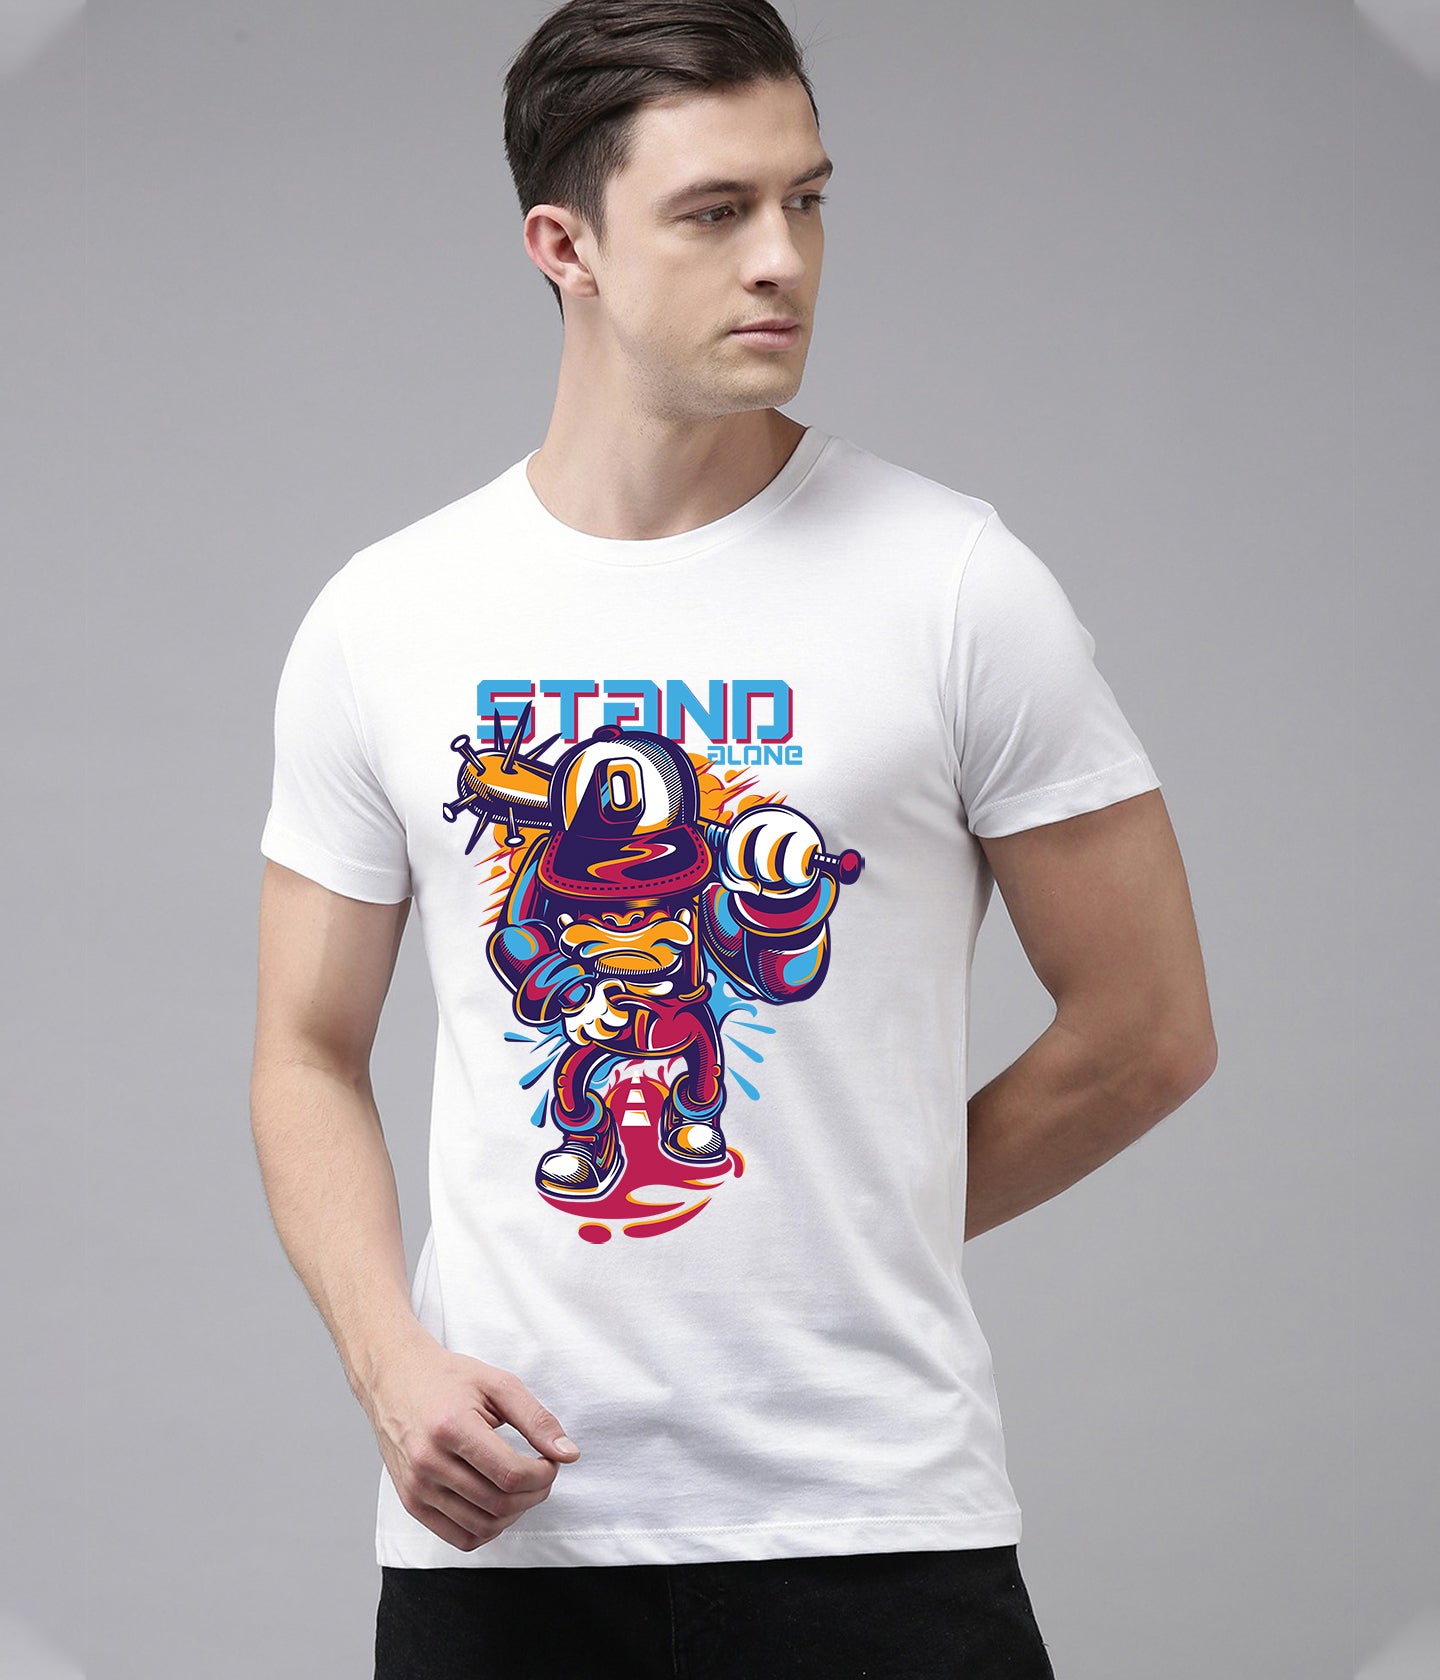 Semantic Graphic Cotton T-shirt - Stand Alone